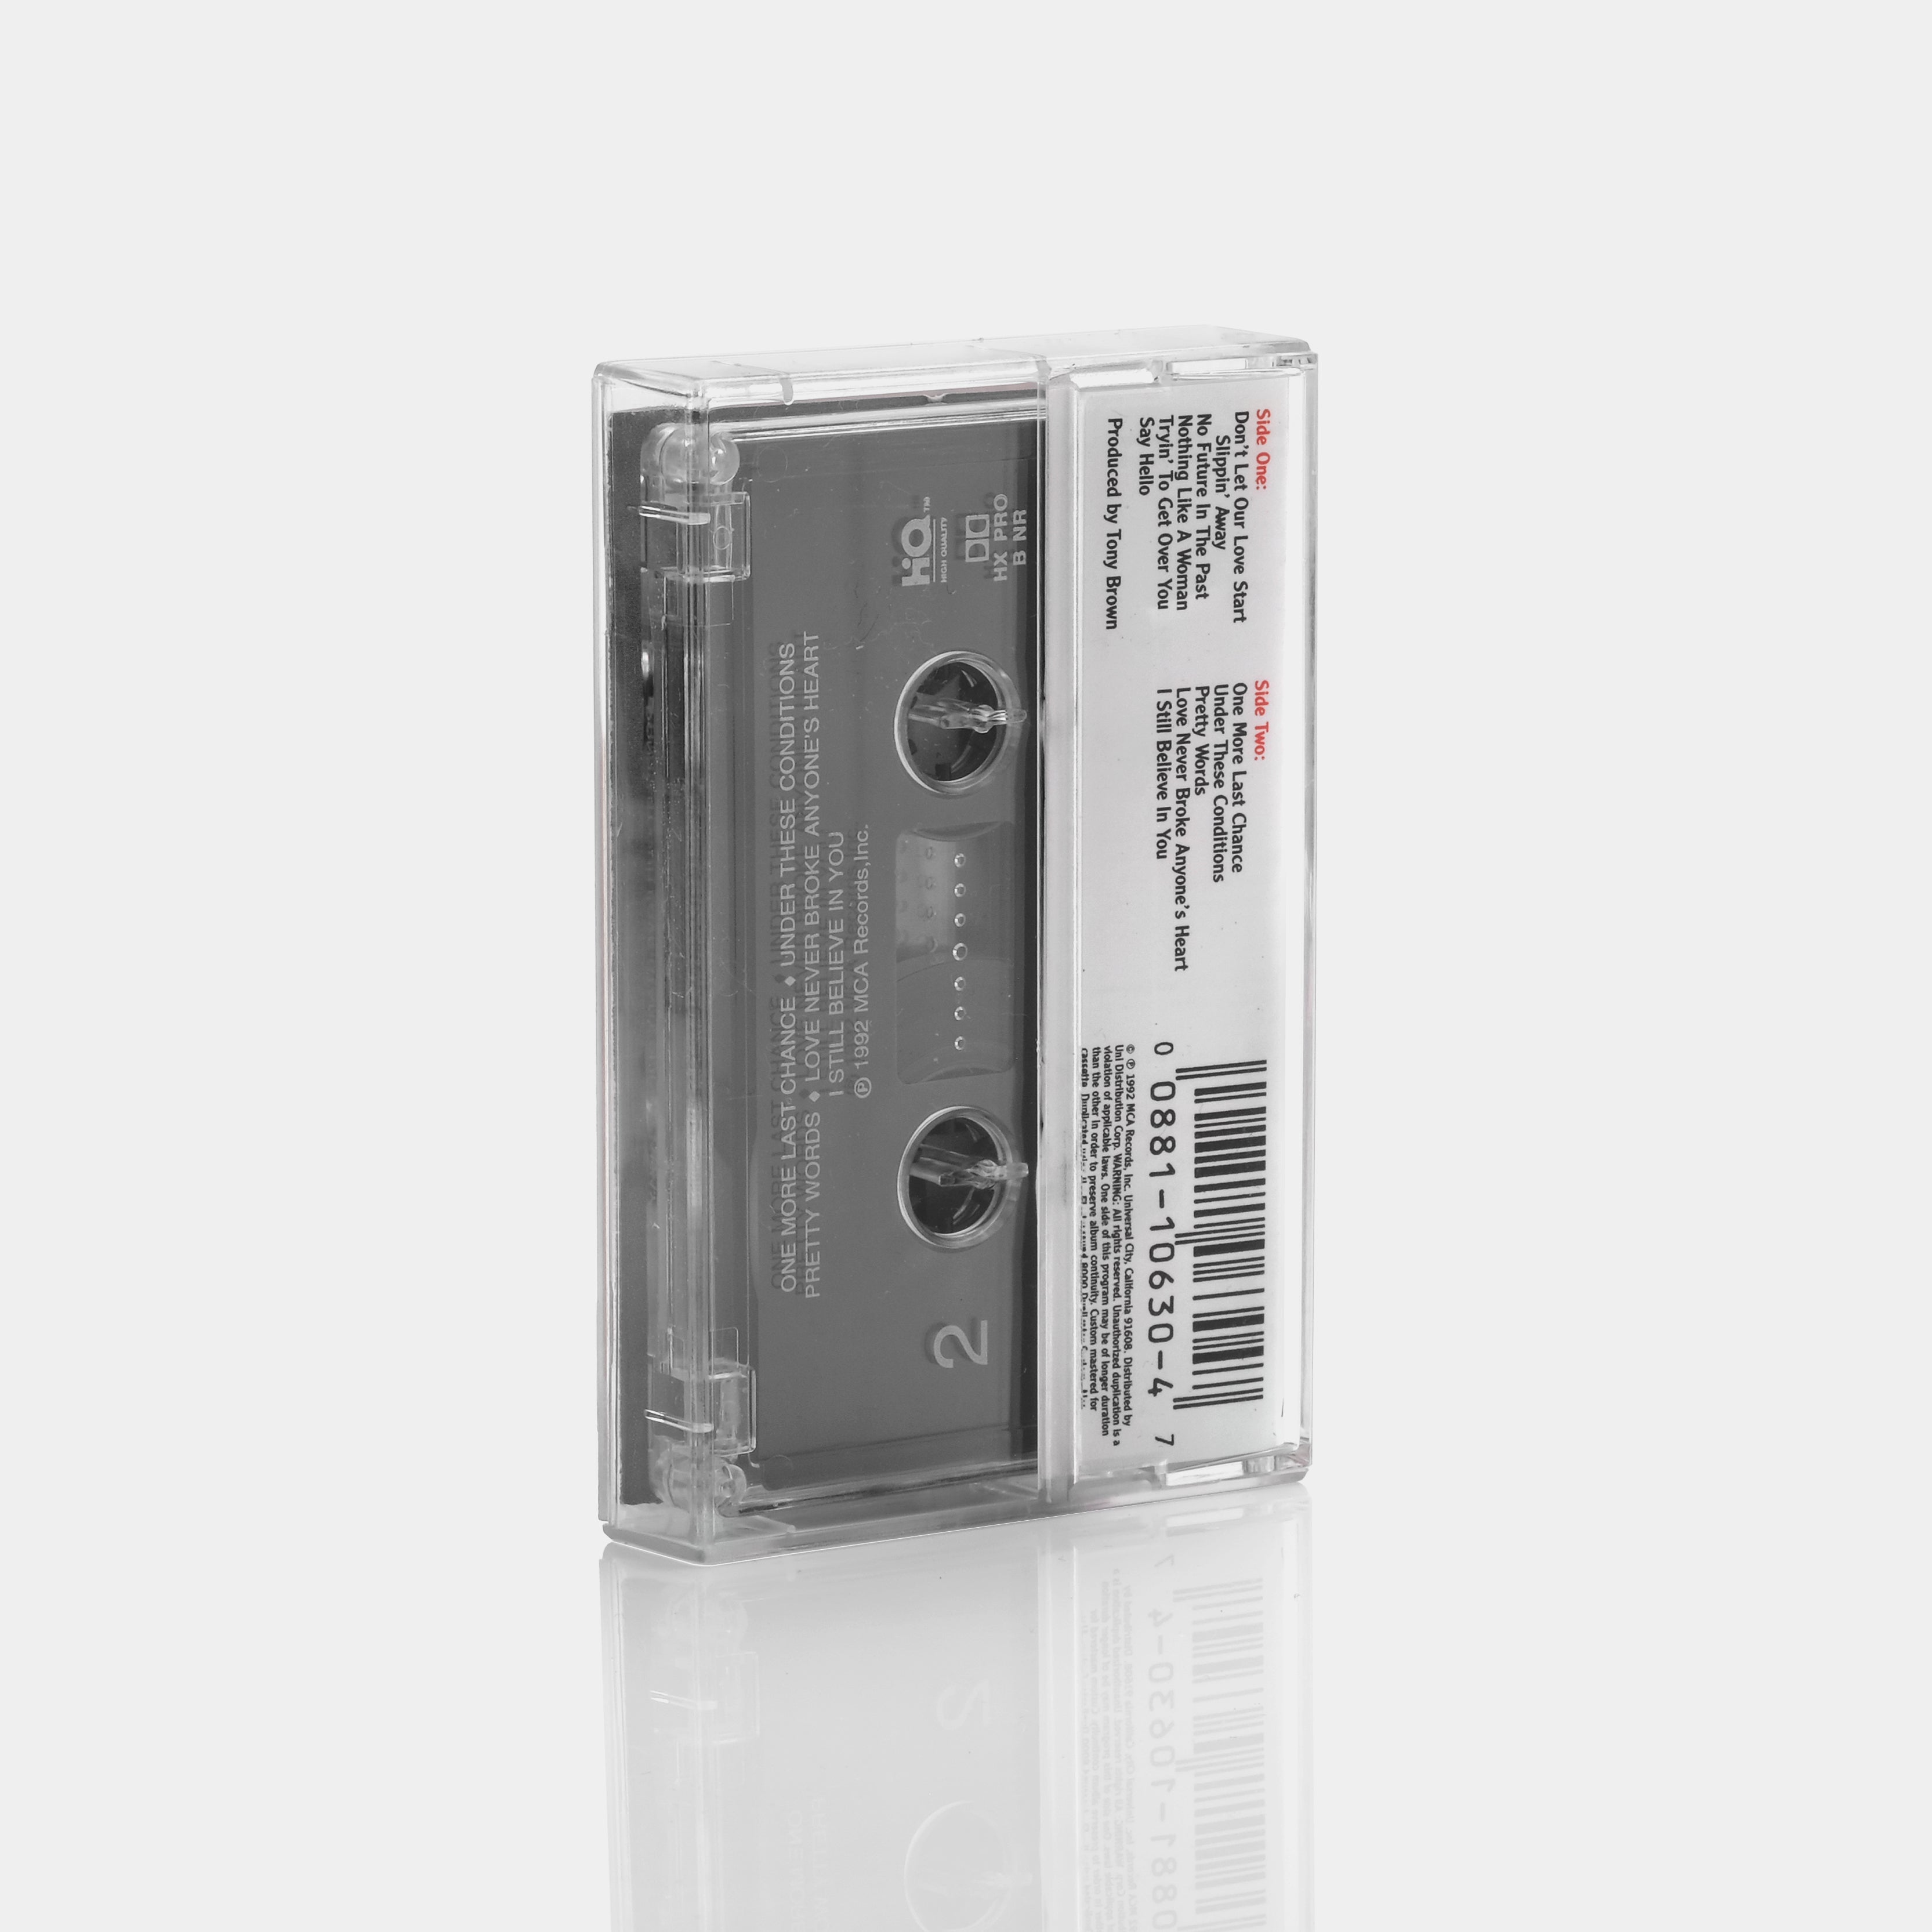 Vince Gill - I Still Believe In You Cassette Tape